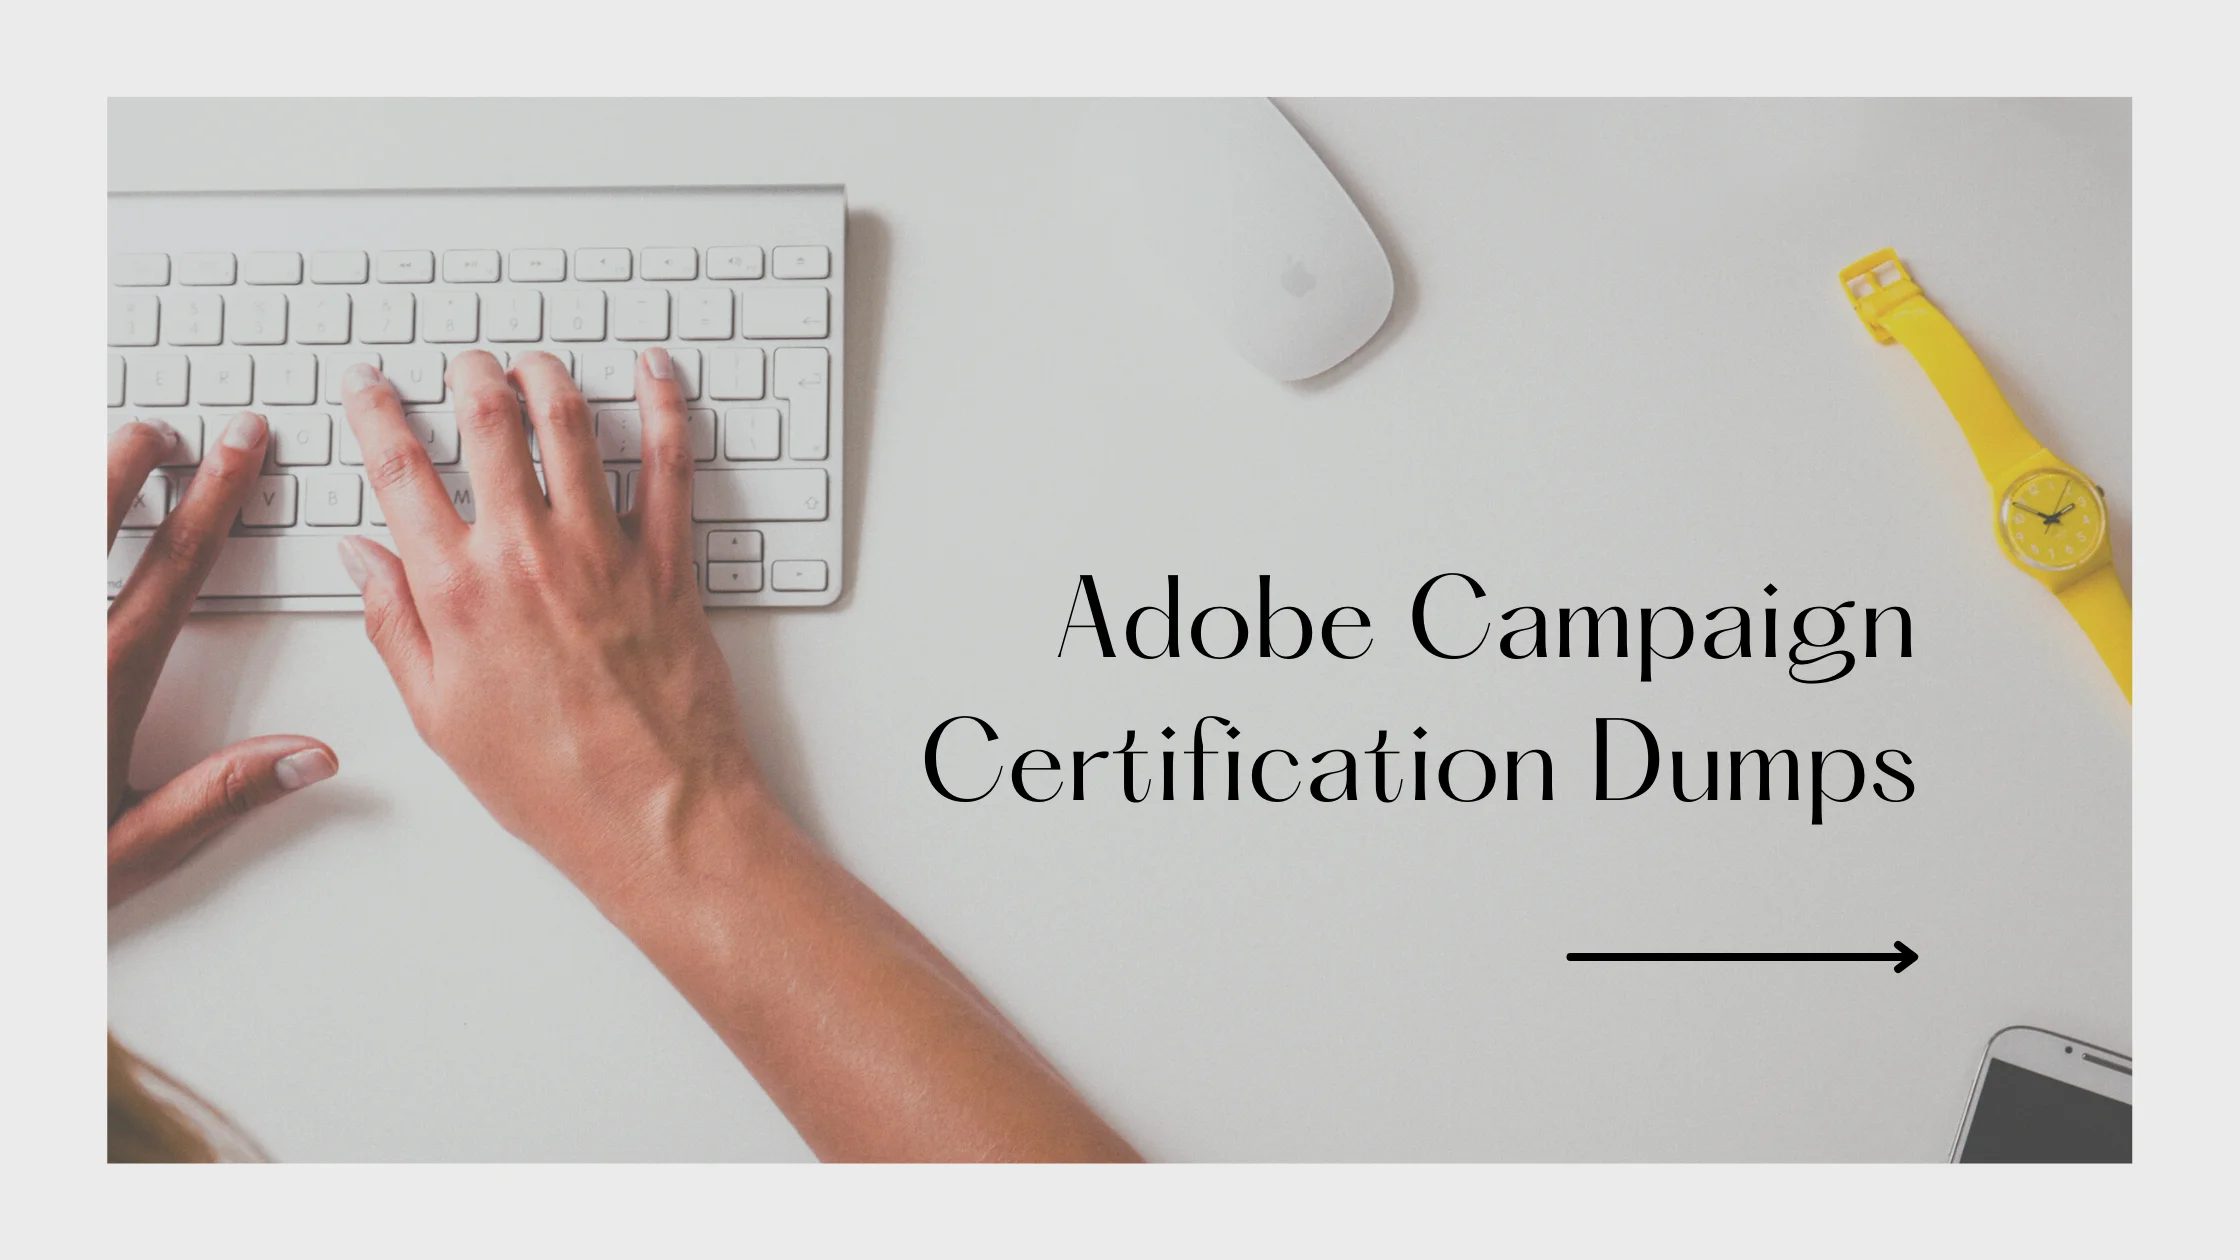 Adobe Campaign Certification Dumps success